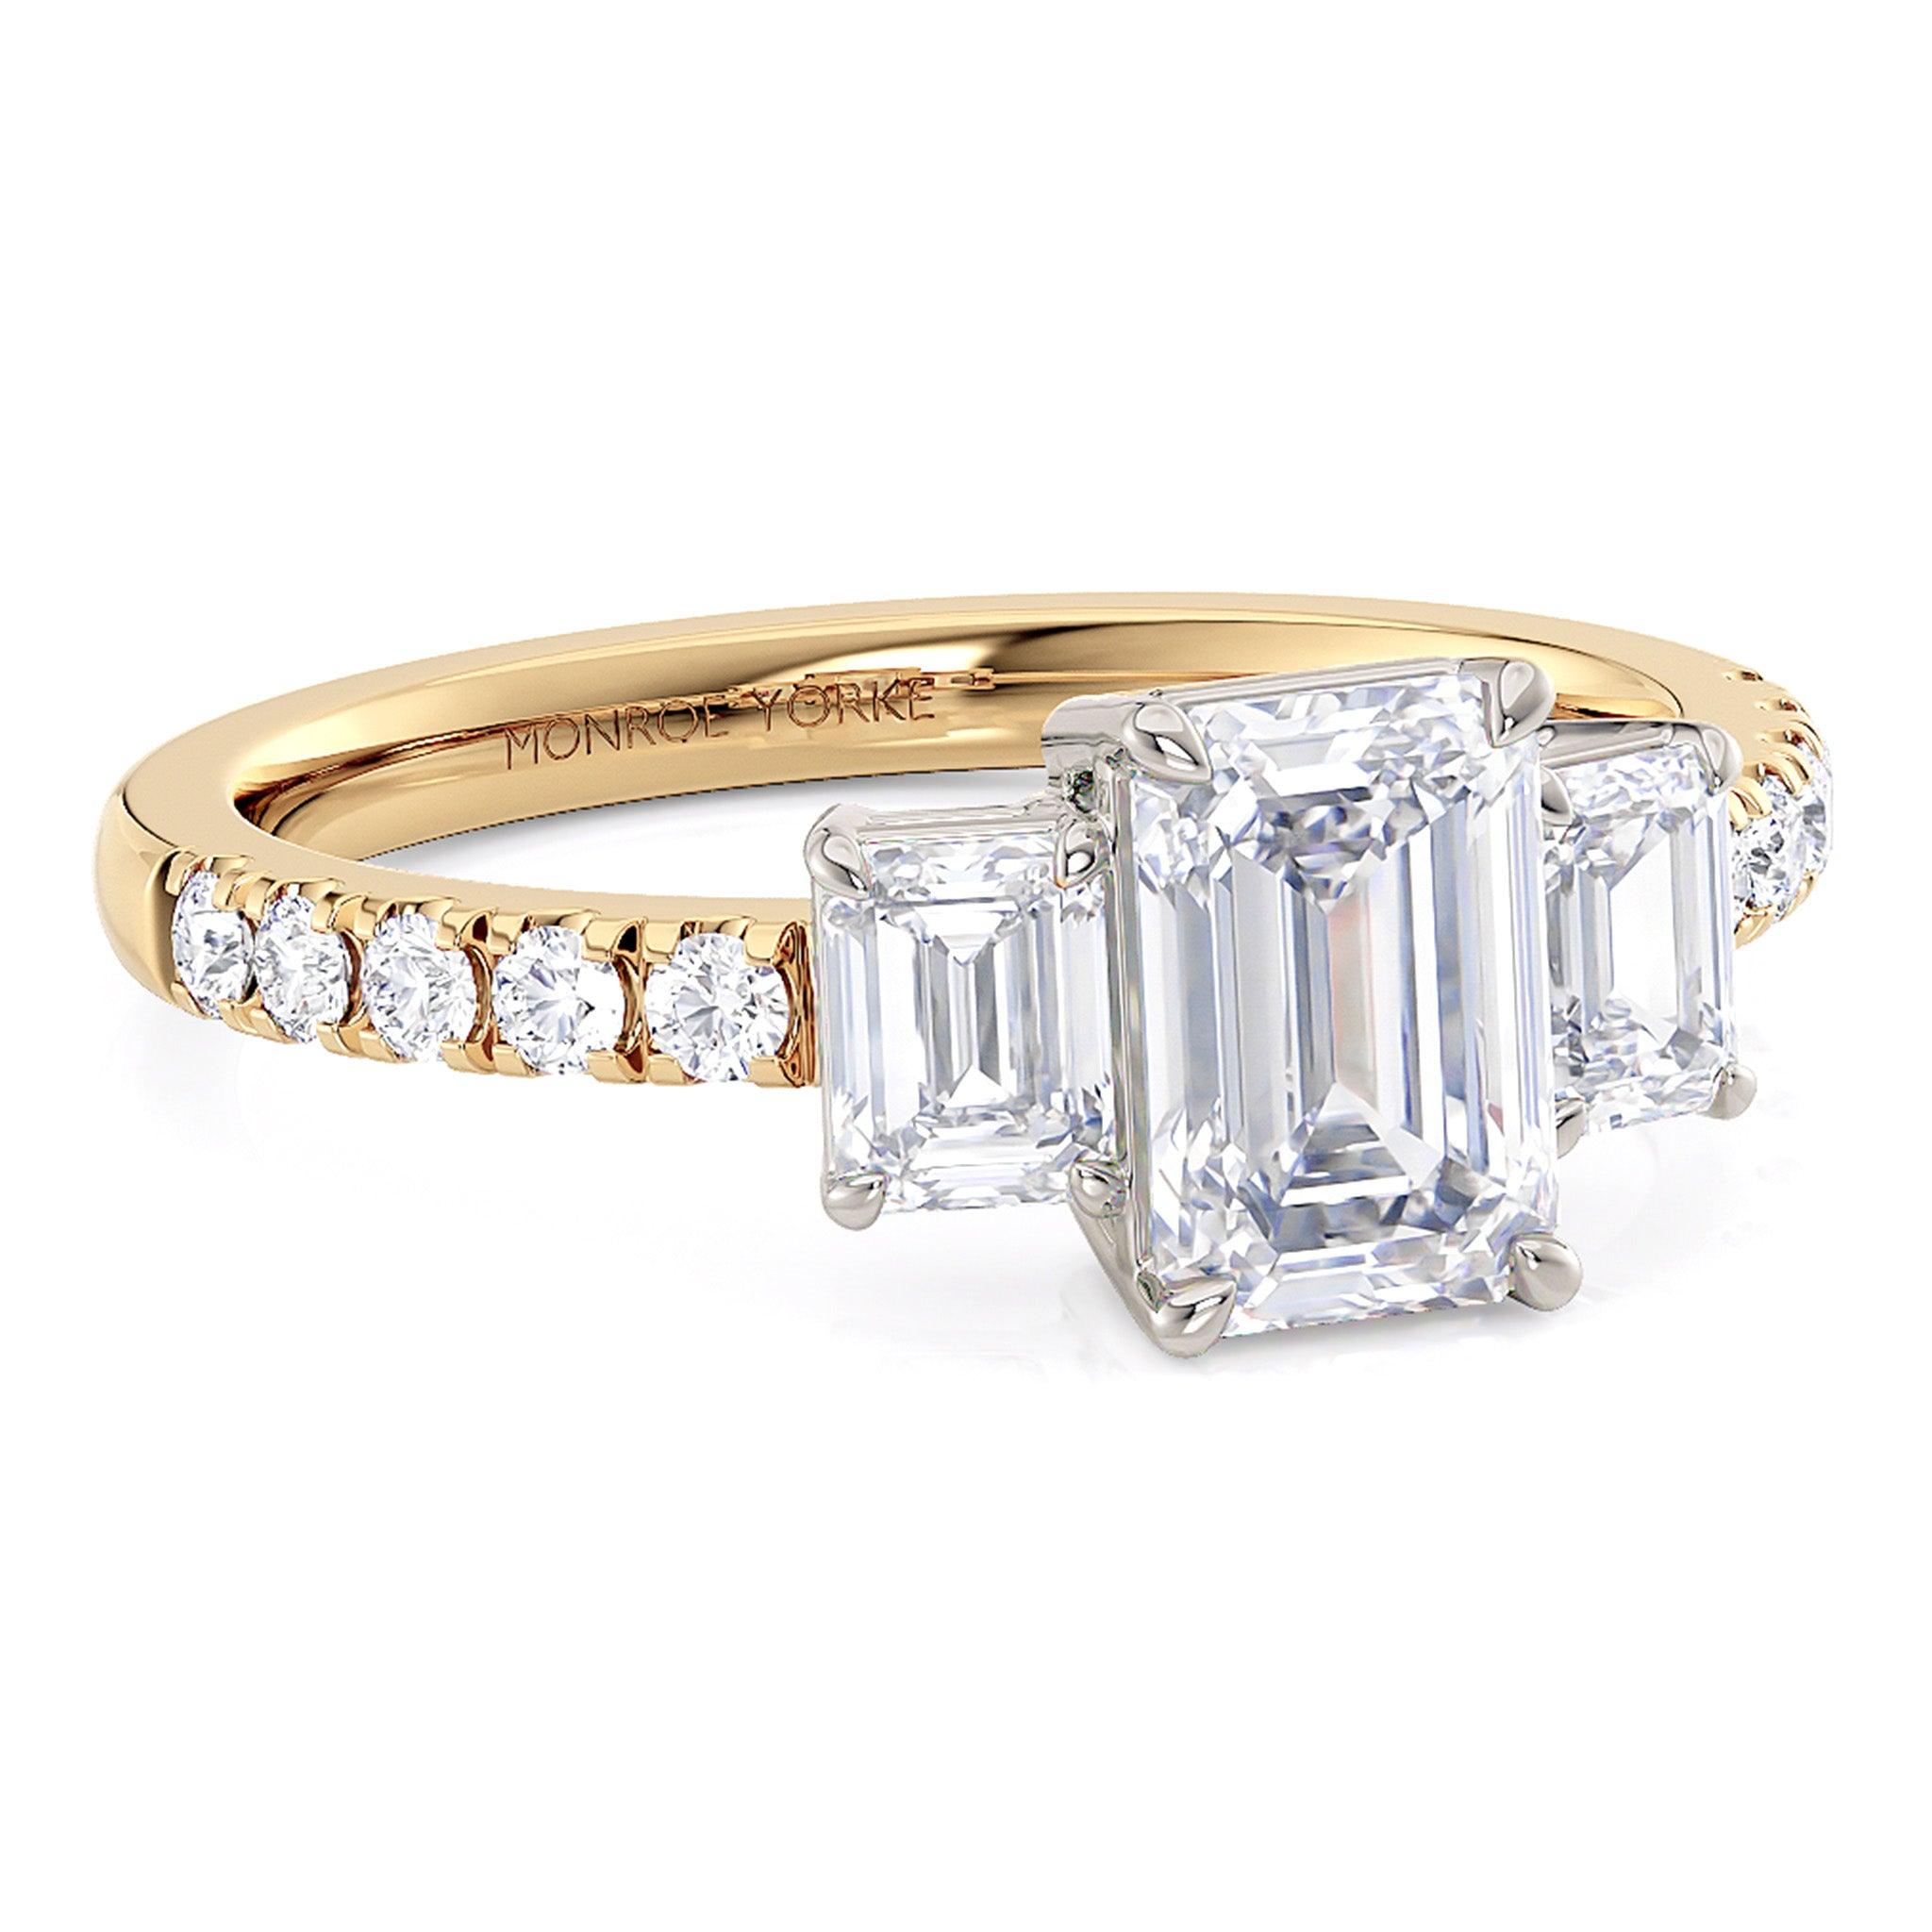 The best emerald cut diamond three stone ring.  Best emerald cut trilogy ring. 